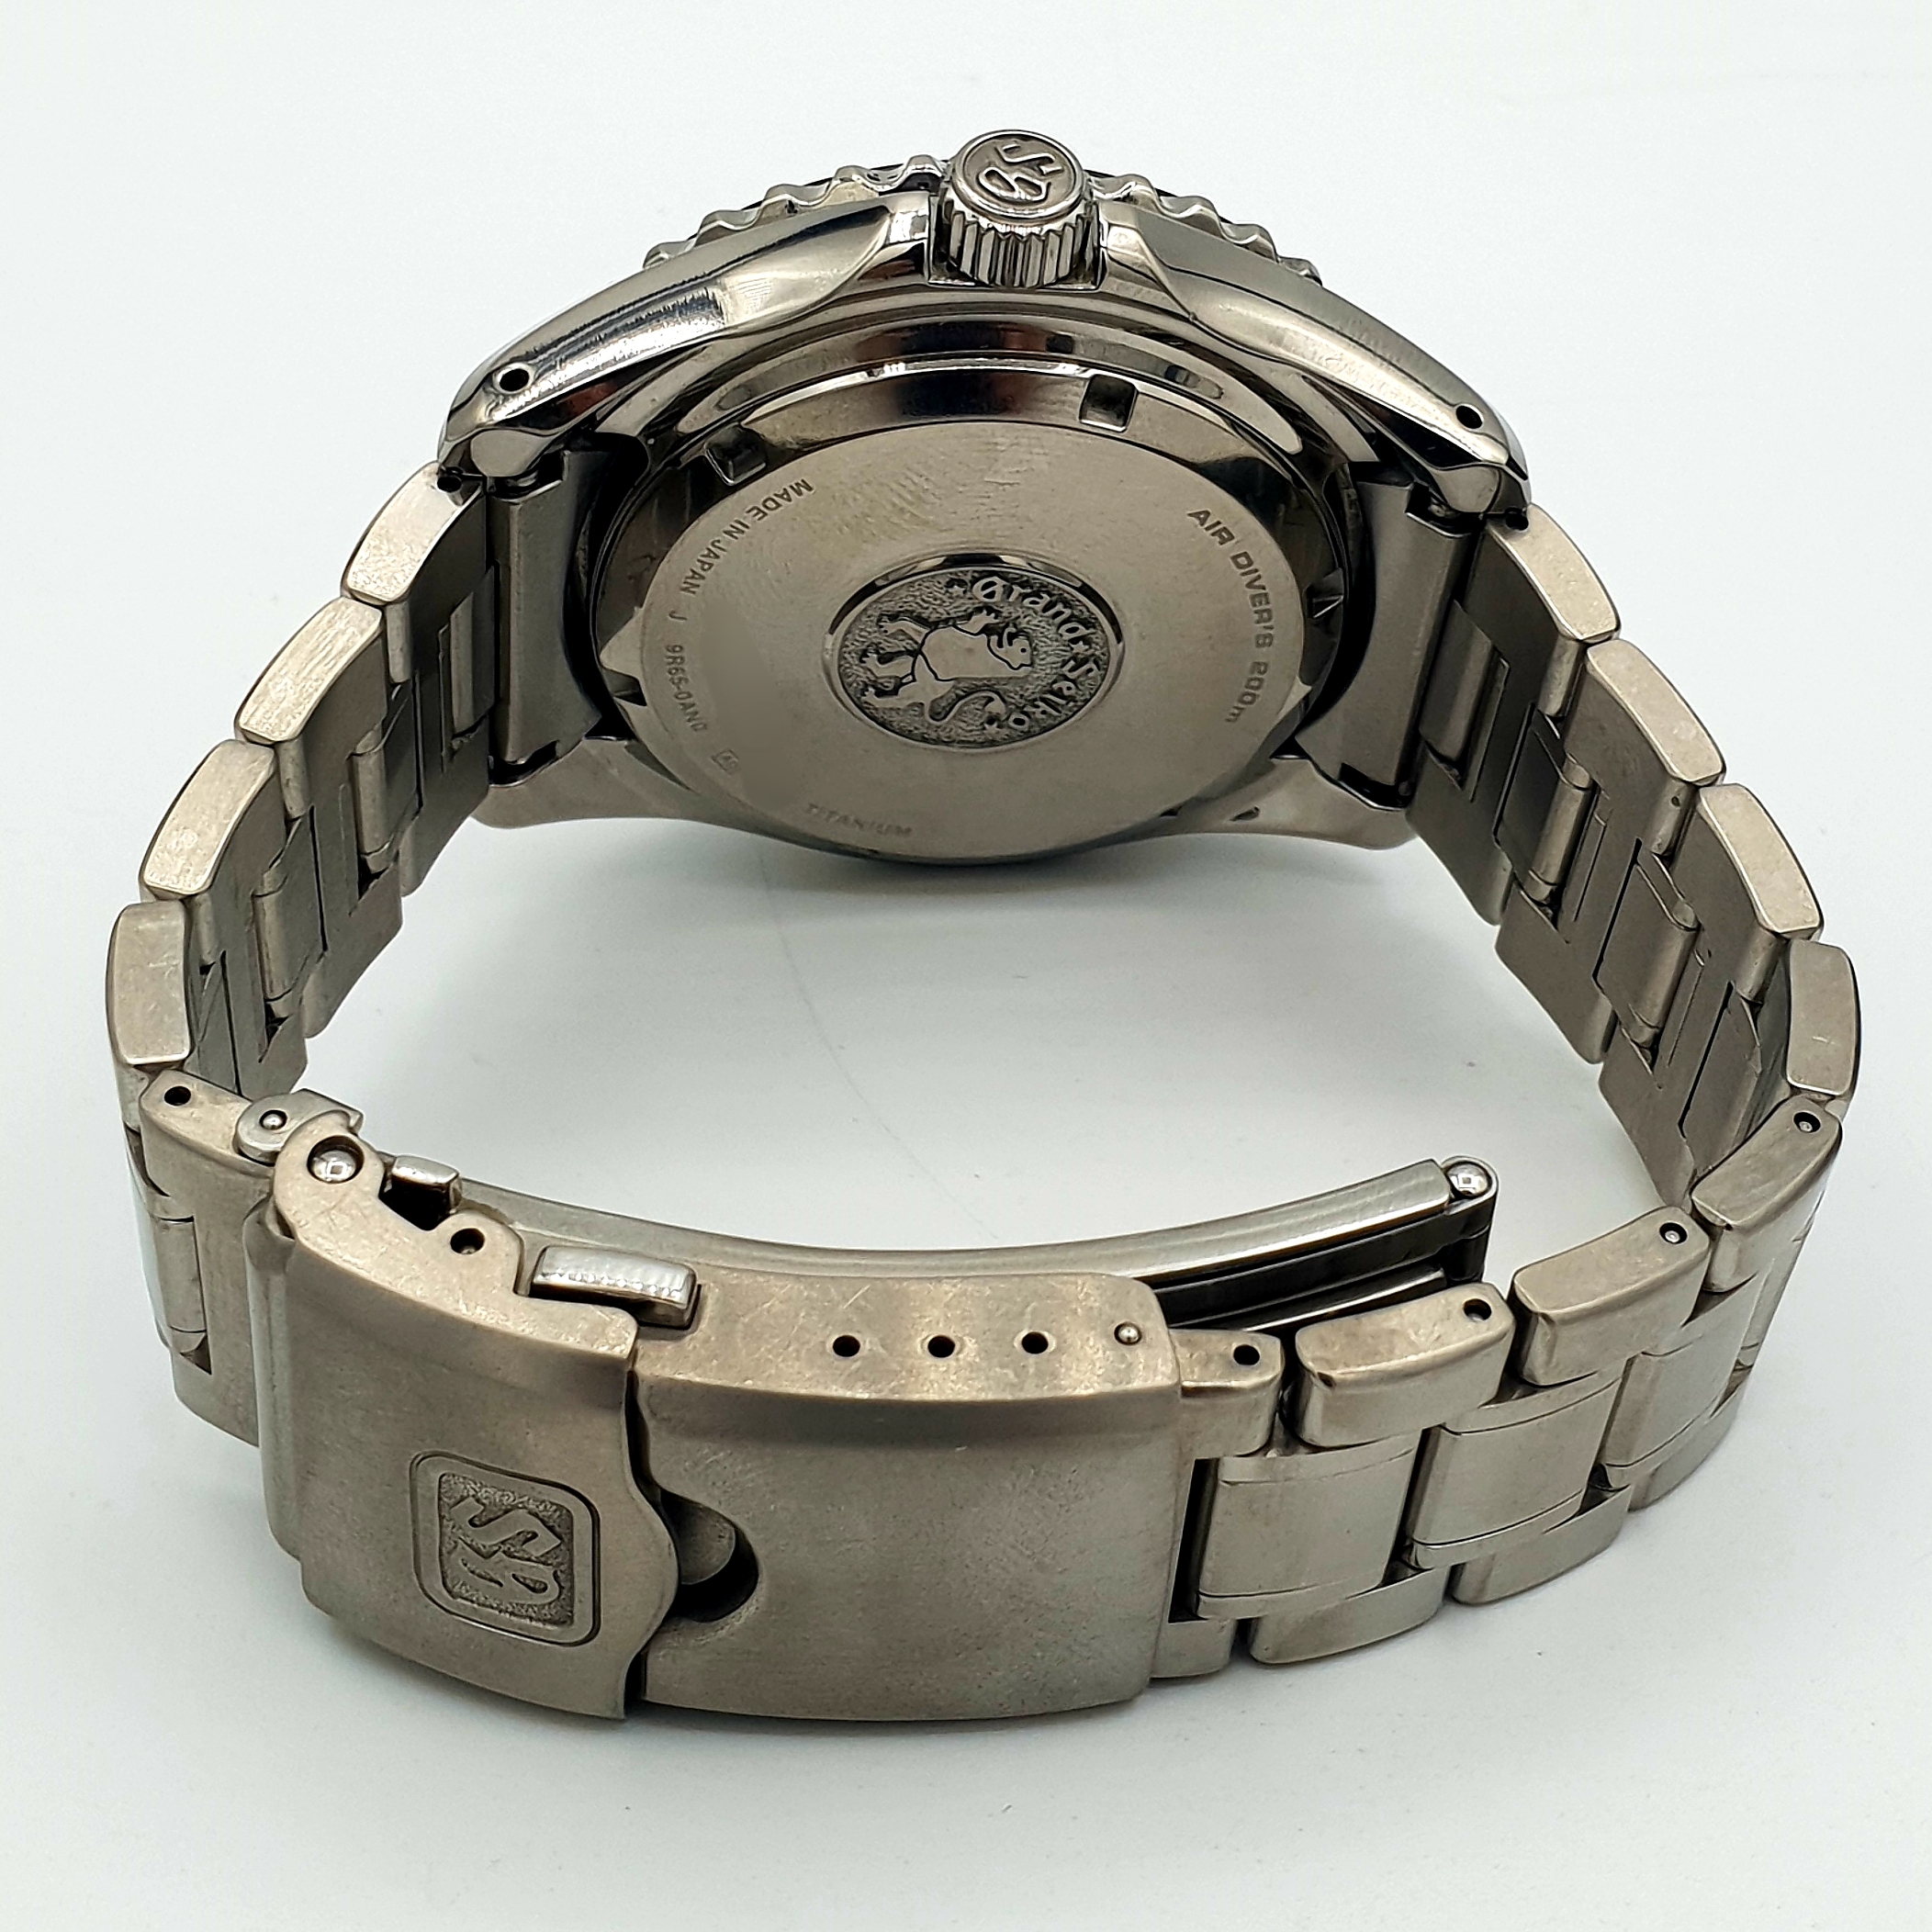 Seiko Diver SBGA031 Cal. 9R65 Spring Drive Power Reserve Titanium Watch -  Seiko